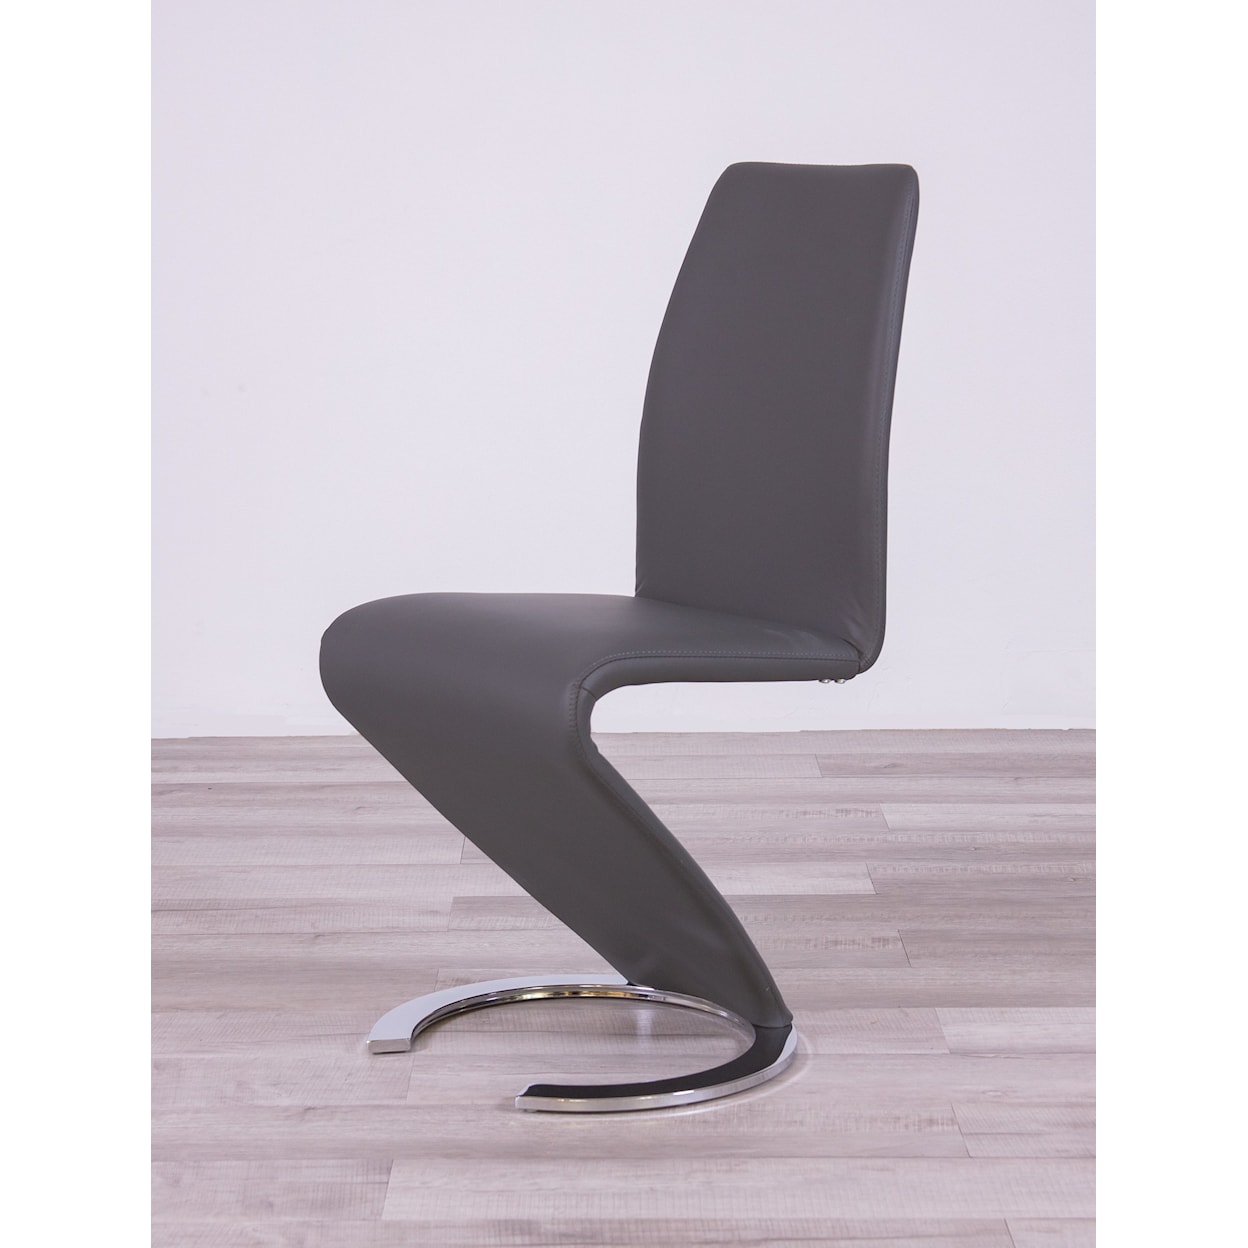 Global Furniture 9002 Grey Horseshoe Dining Chair Set of 2